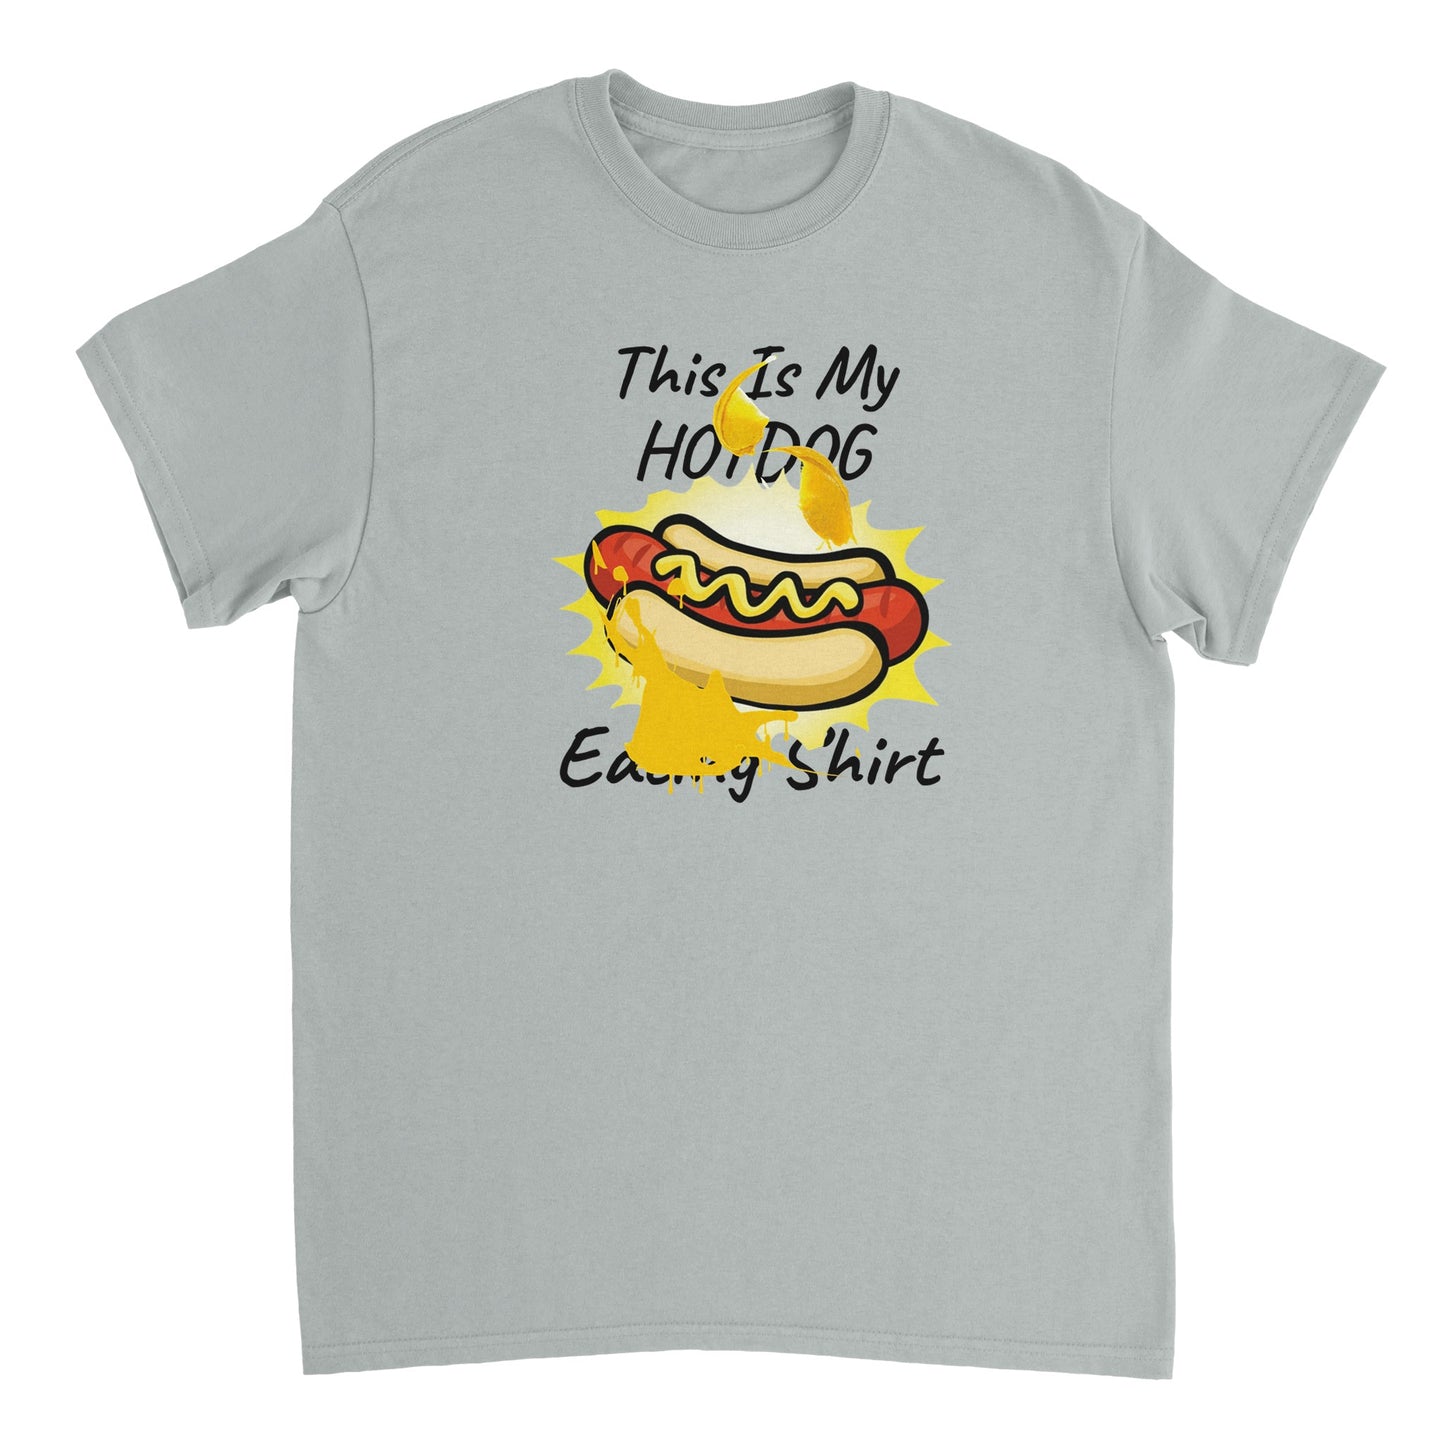 Heavyweight Unisex Crewneck T-shirt "Hotdog Eating Shirt"